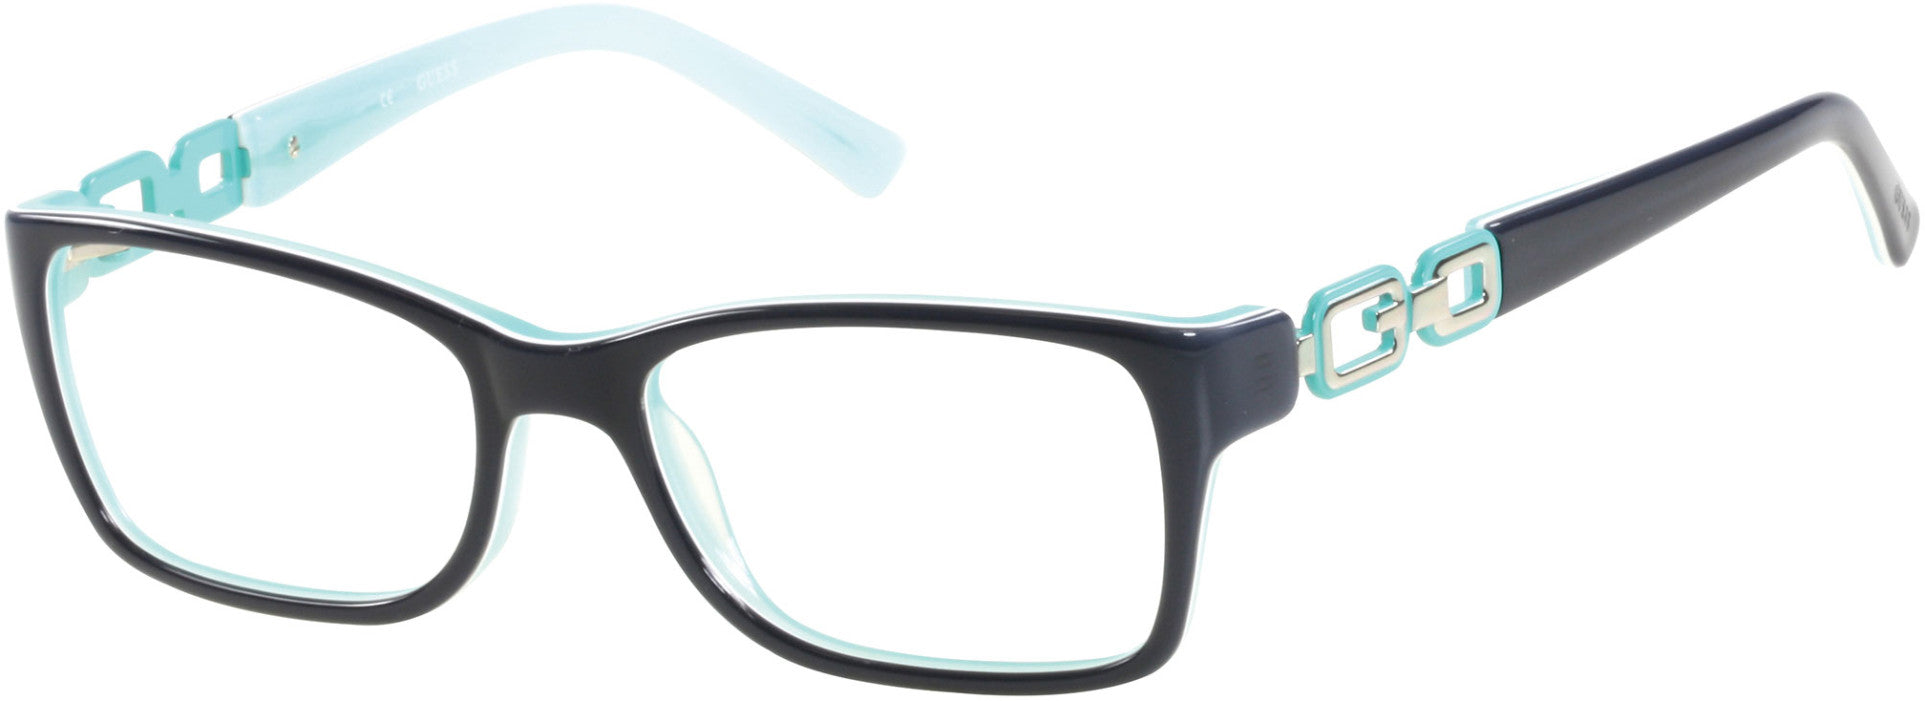 Guess GU2406 Eyeglasses B74-B74 - Blue Green